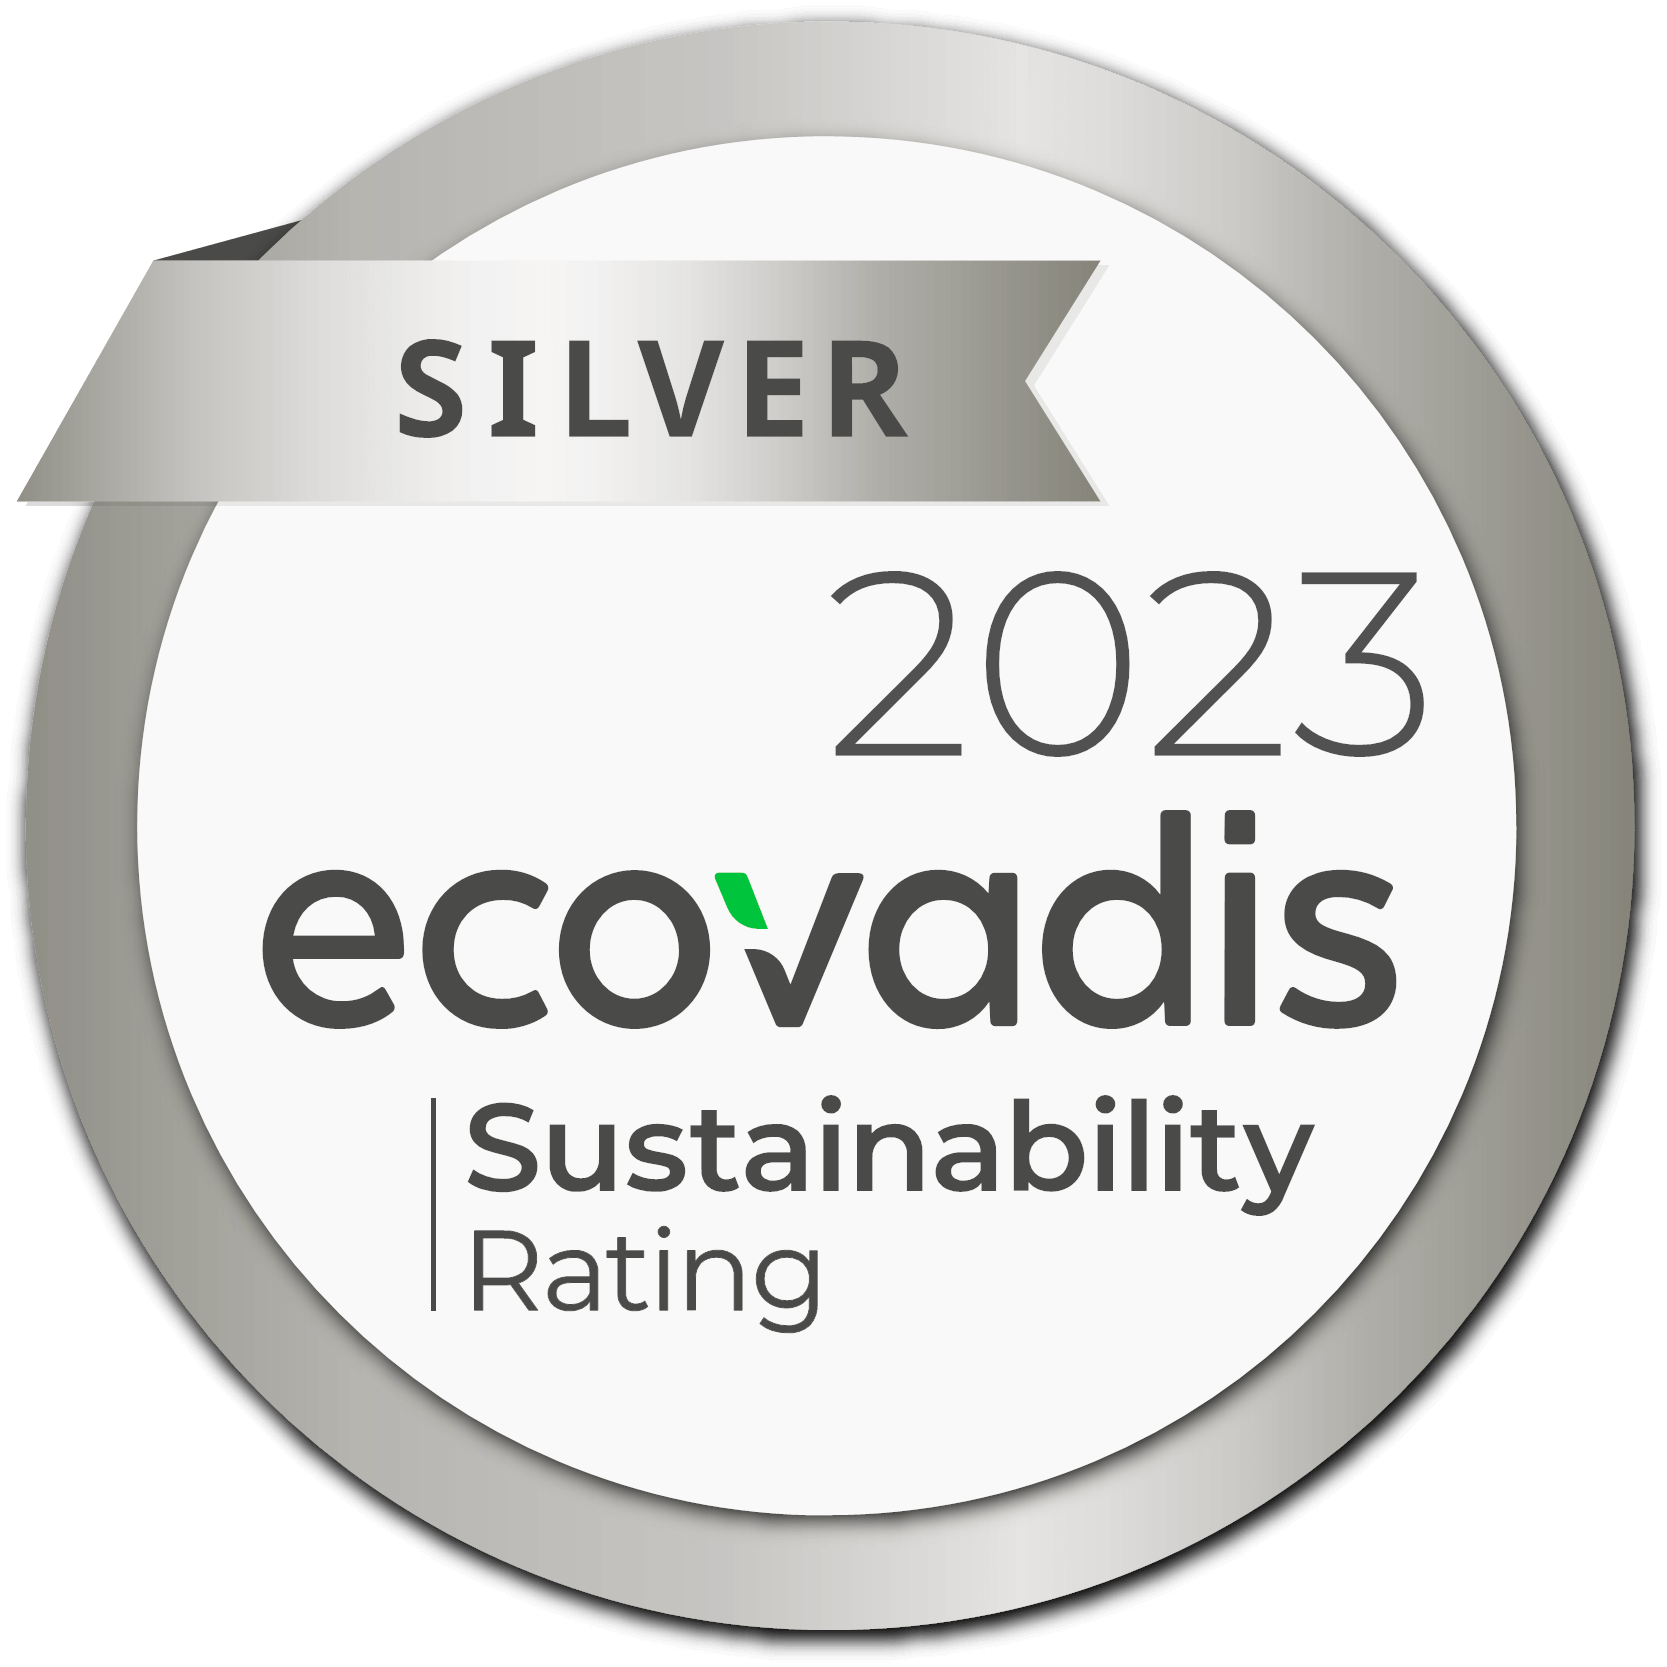 Ecovadis silver 2023 logo